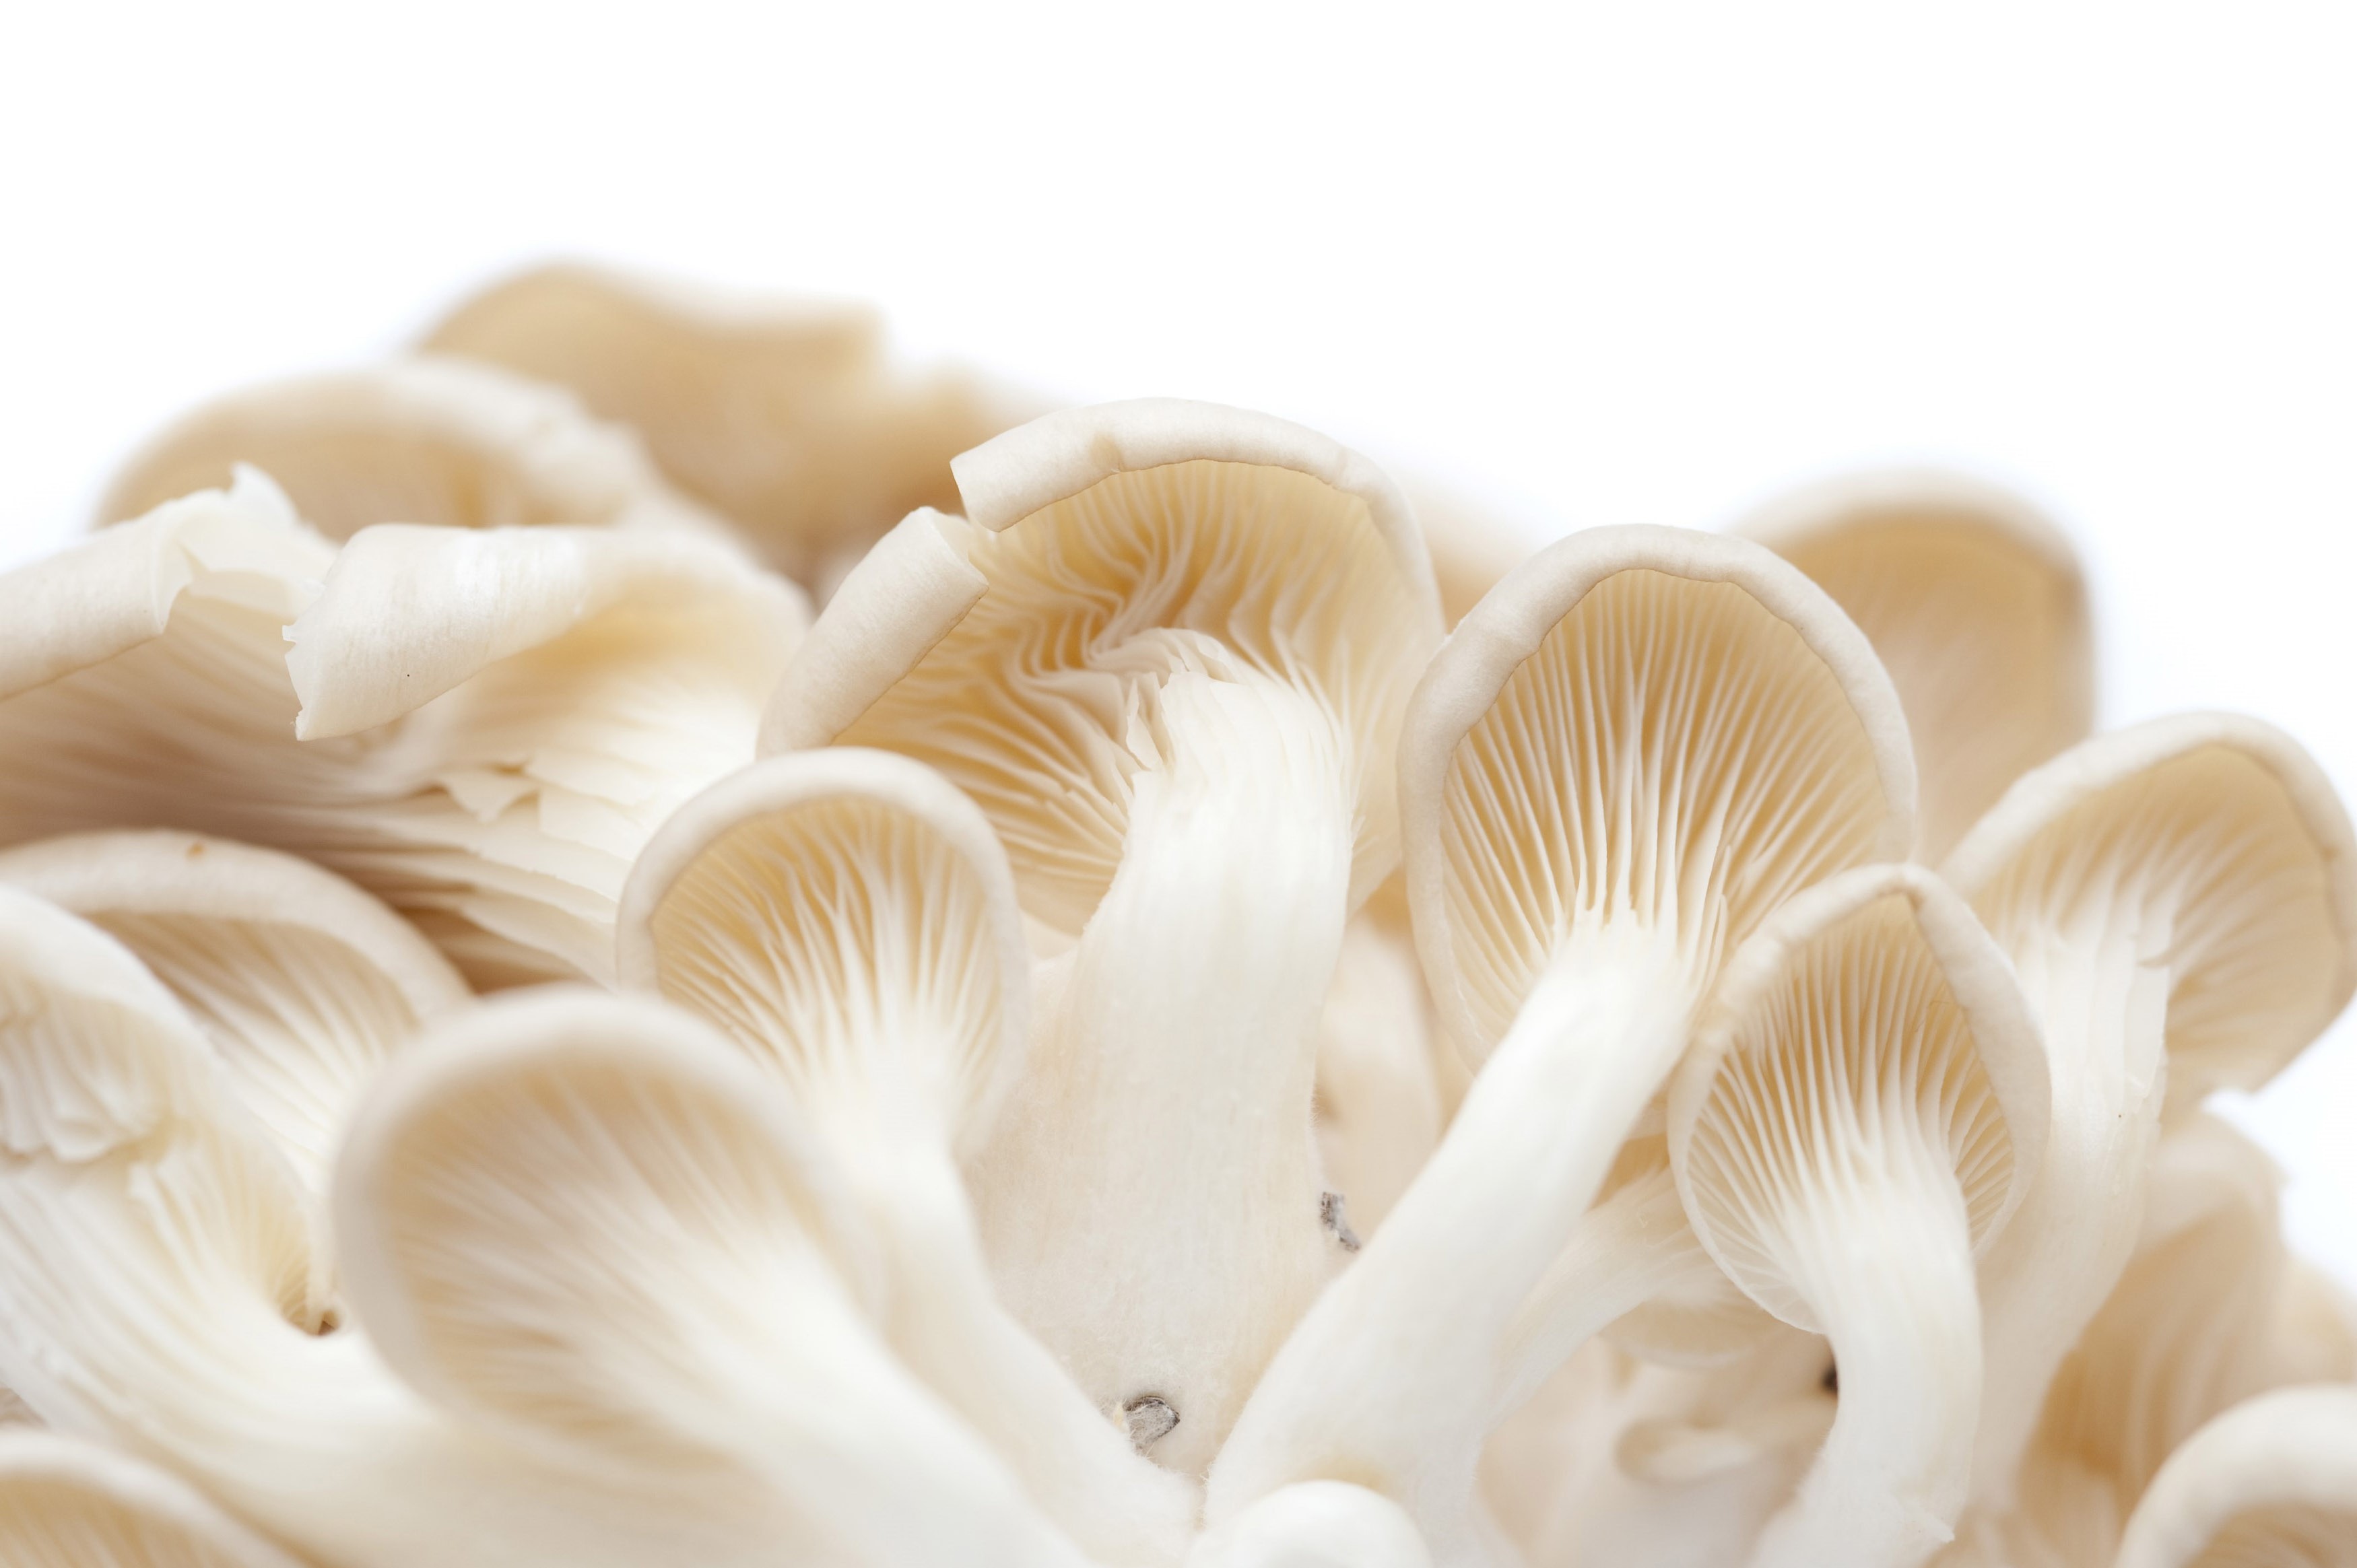 Fresh oyster mushrooms - Free Stock Image